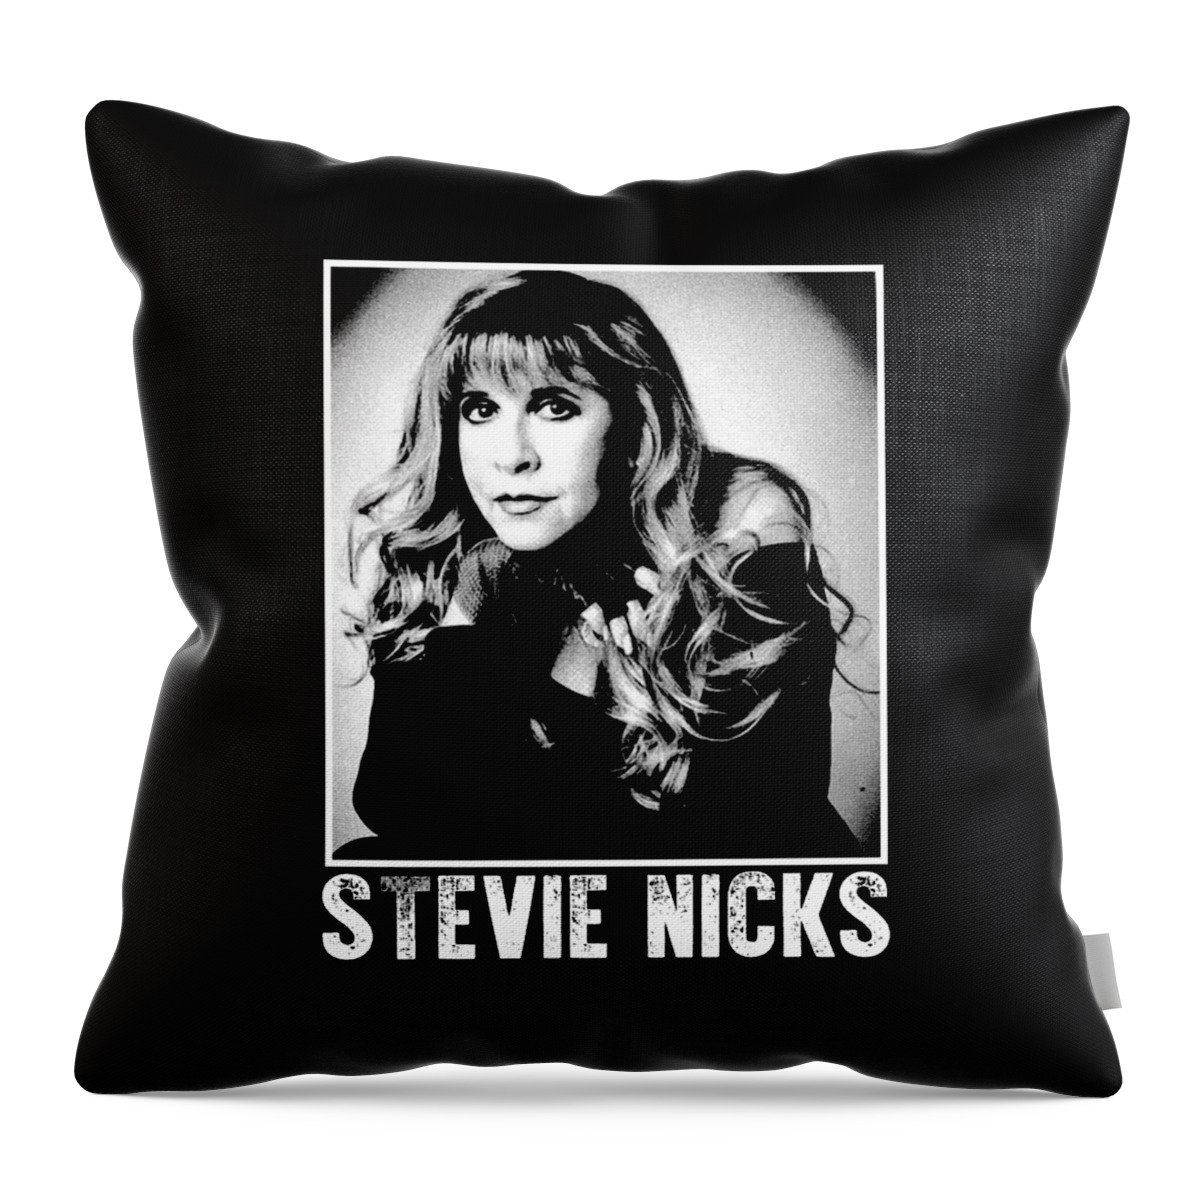 Stevie Nicks Throw Pillow featuring the digital art Stevie Nicks For Fans Gifts by Notorious Artist